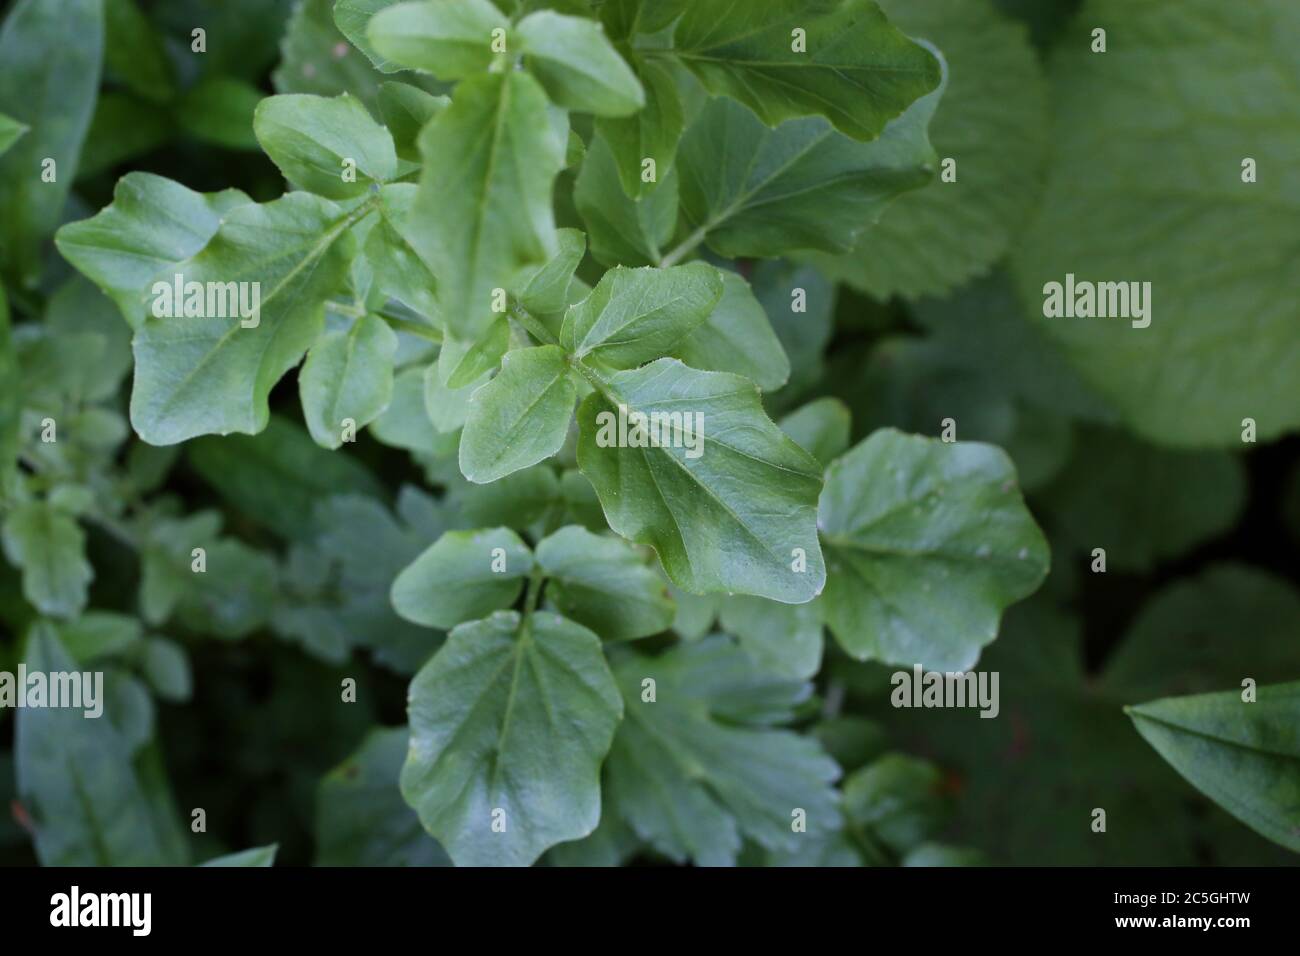 Cardamine amara subsp. balcanica - Wild plant shot in summer. Stock Photo